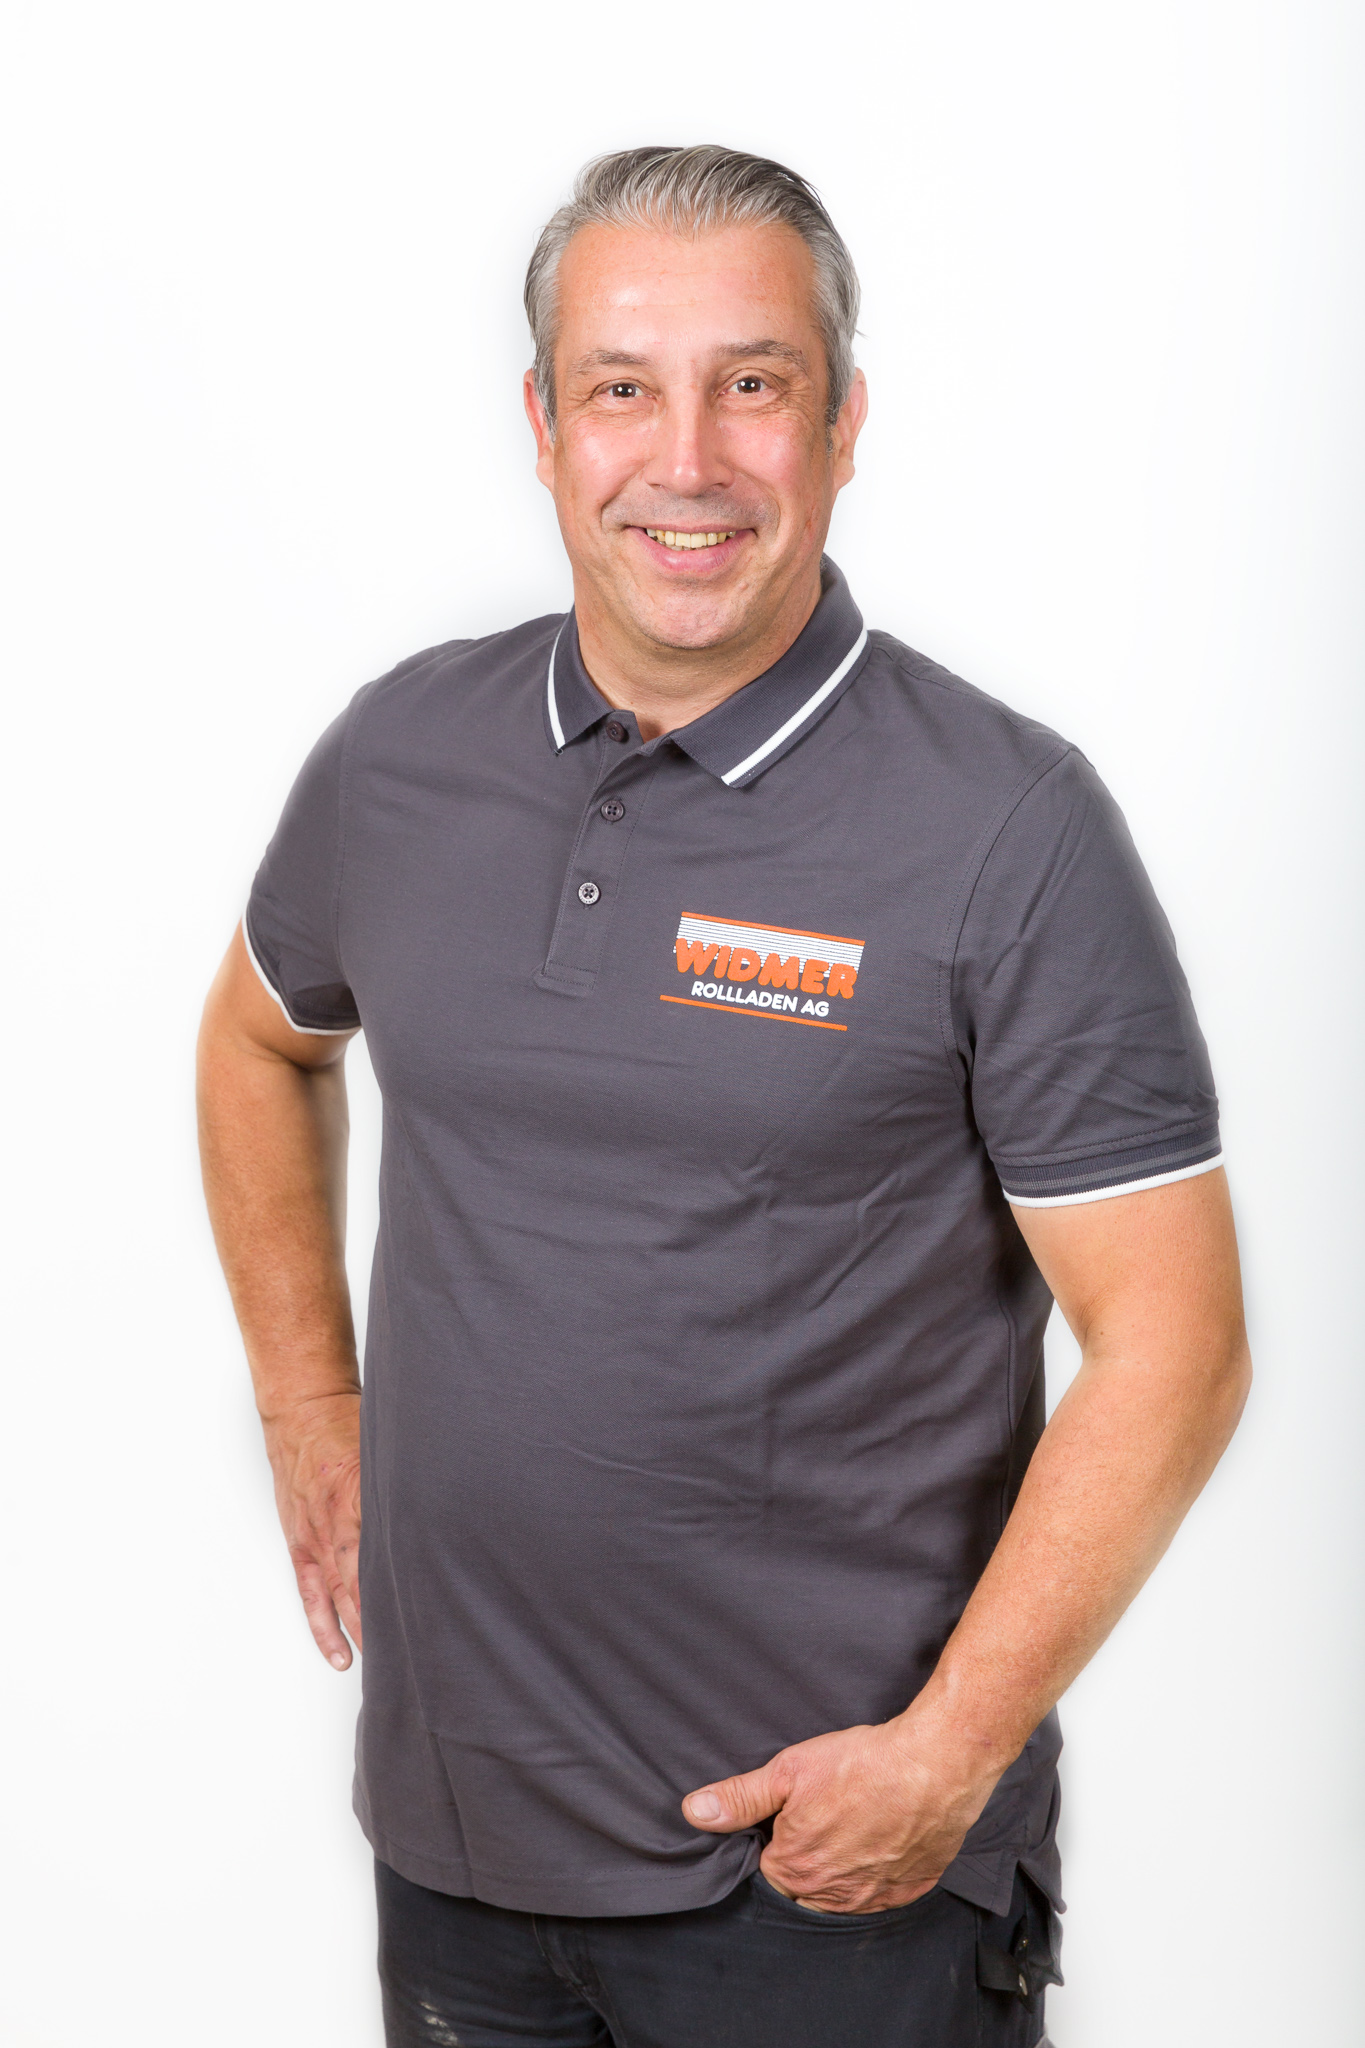 Sadri Demiri, Servicemonteur bei Widmer Rollladen AG